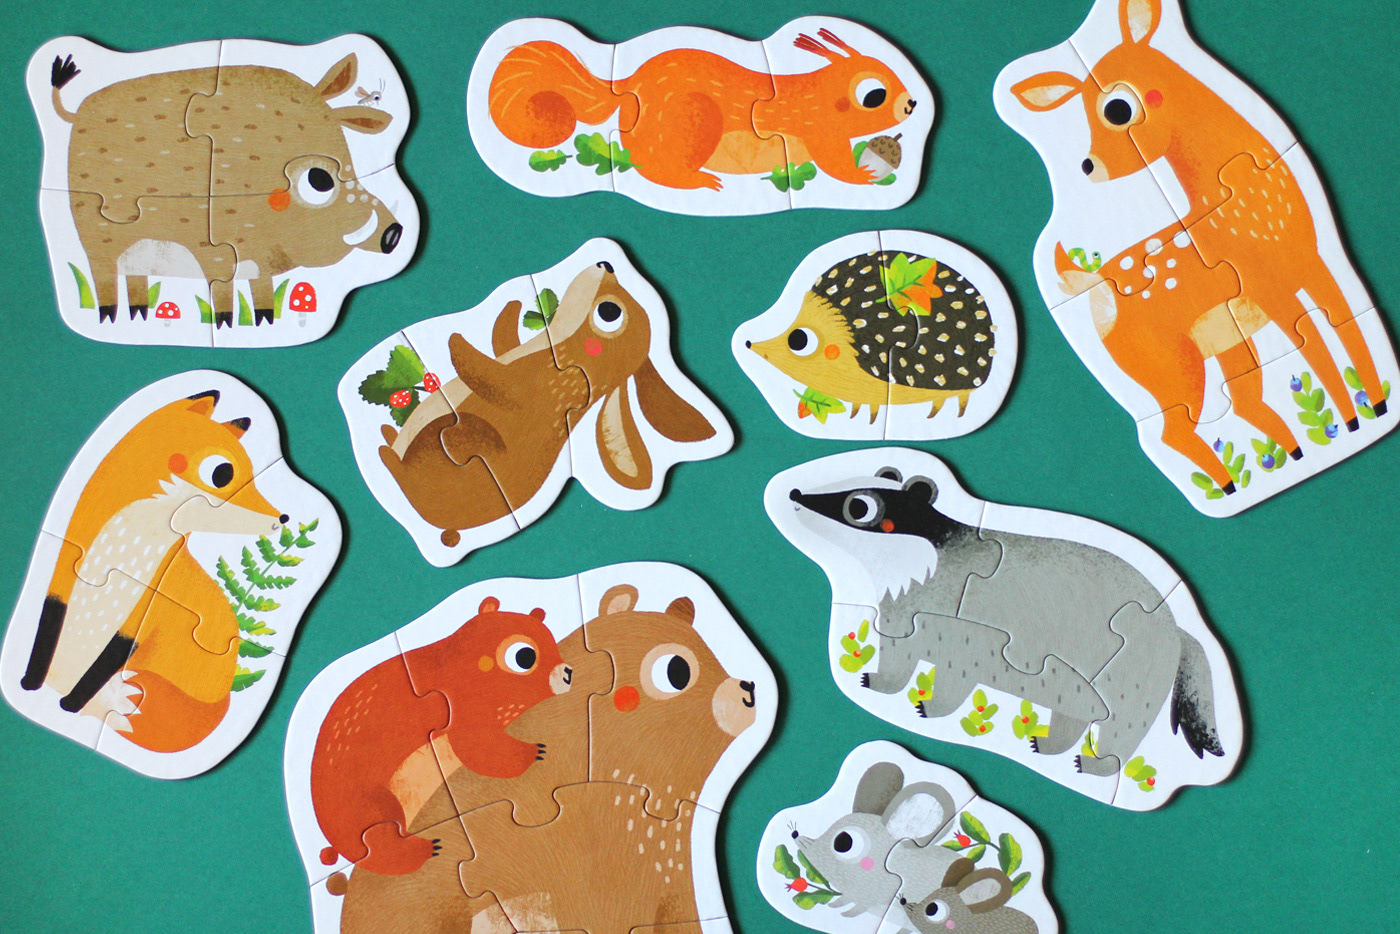 animals children illustration forest forest animals FOX Hedgehog kids illustration puzzle toys toys design